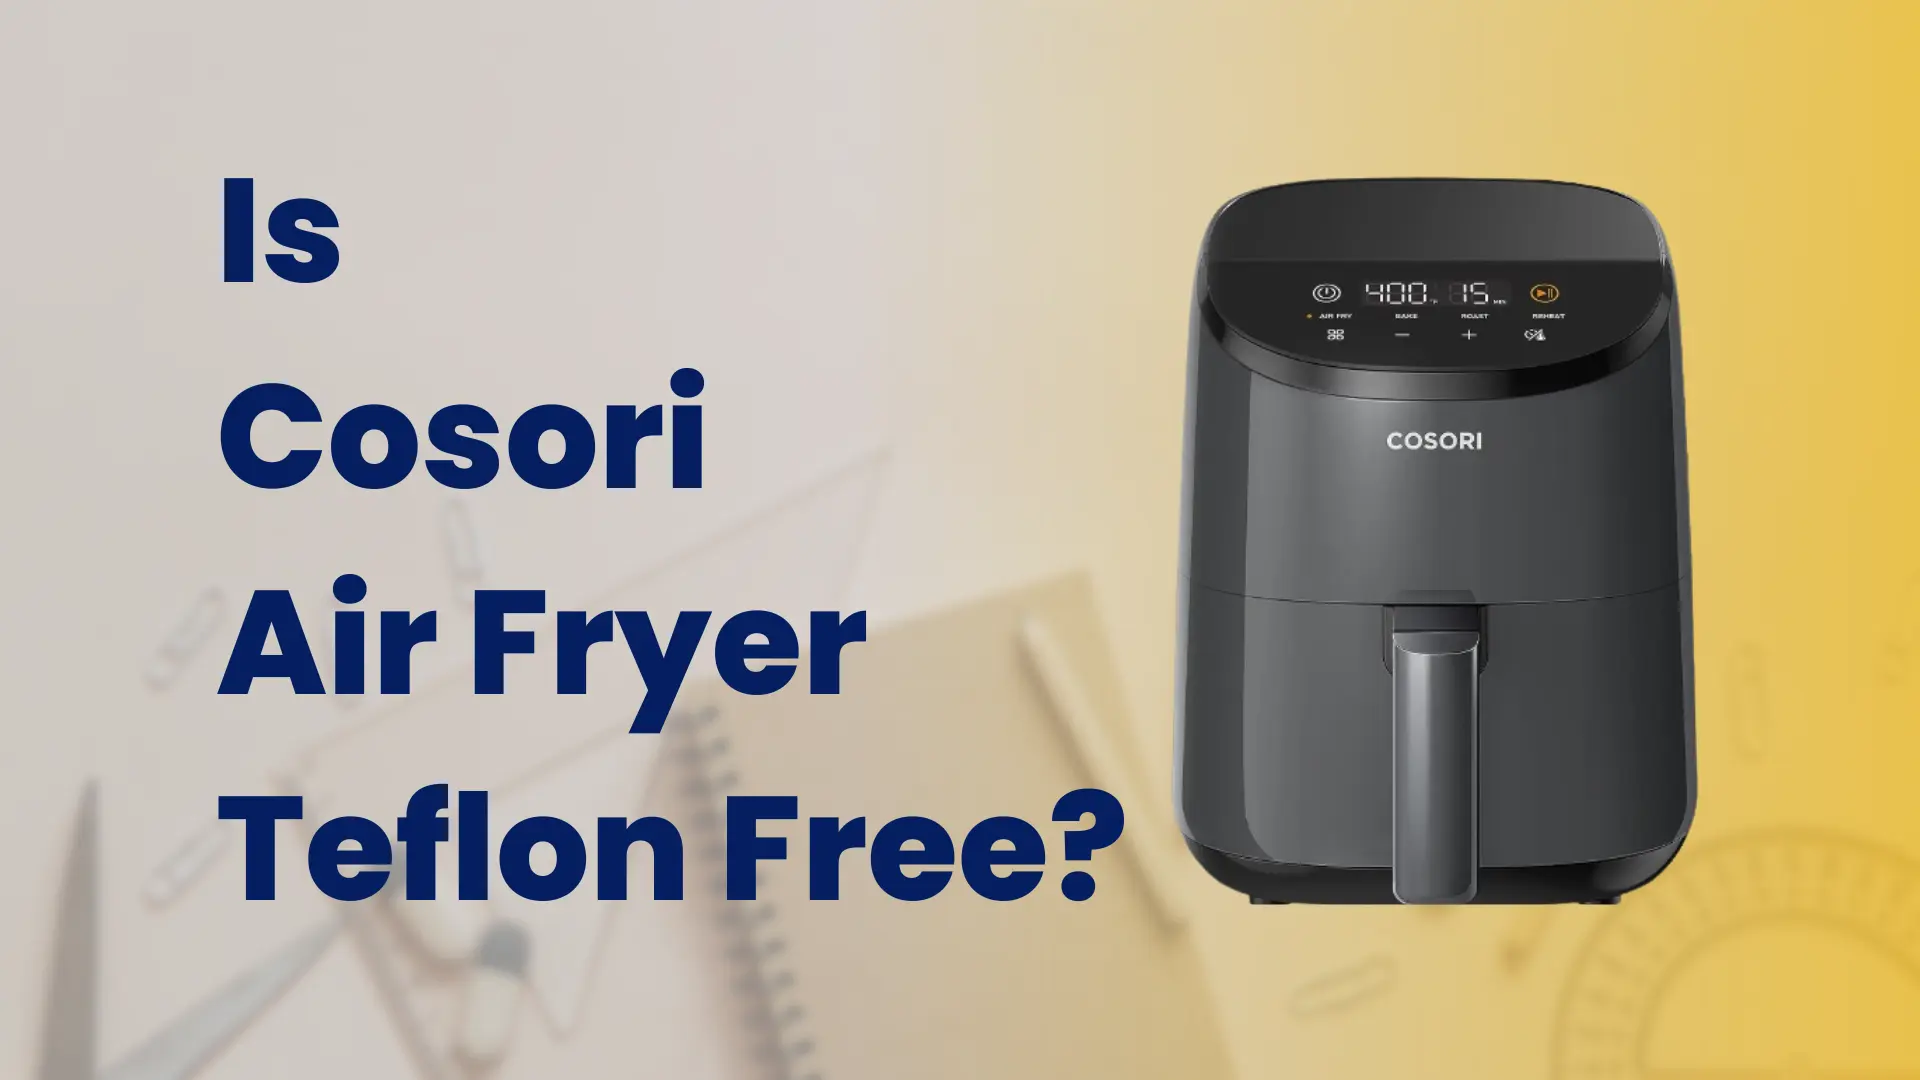 Is Cosori Air Fryer Teflon Free